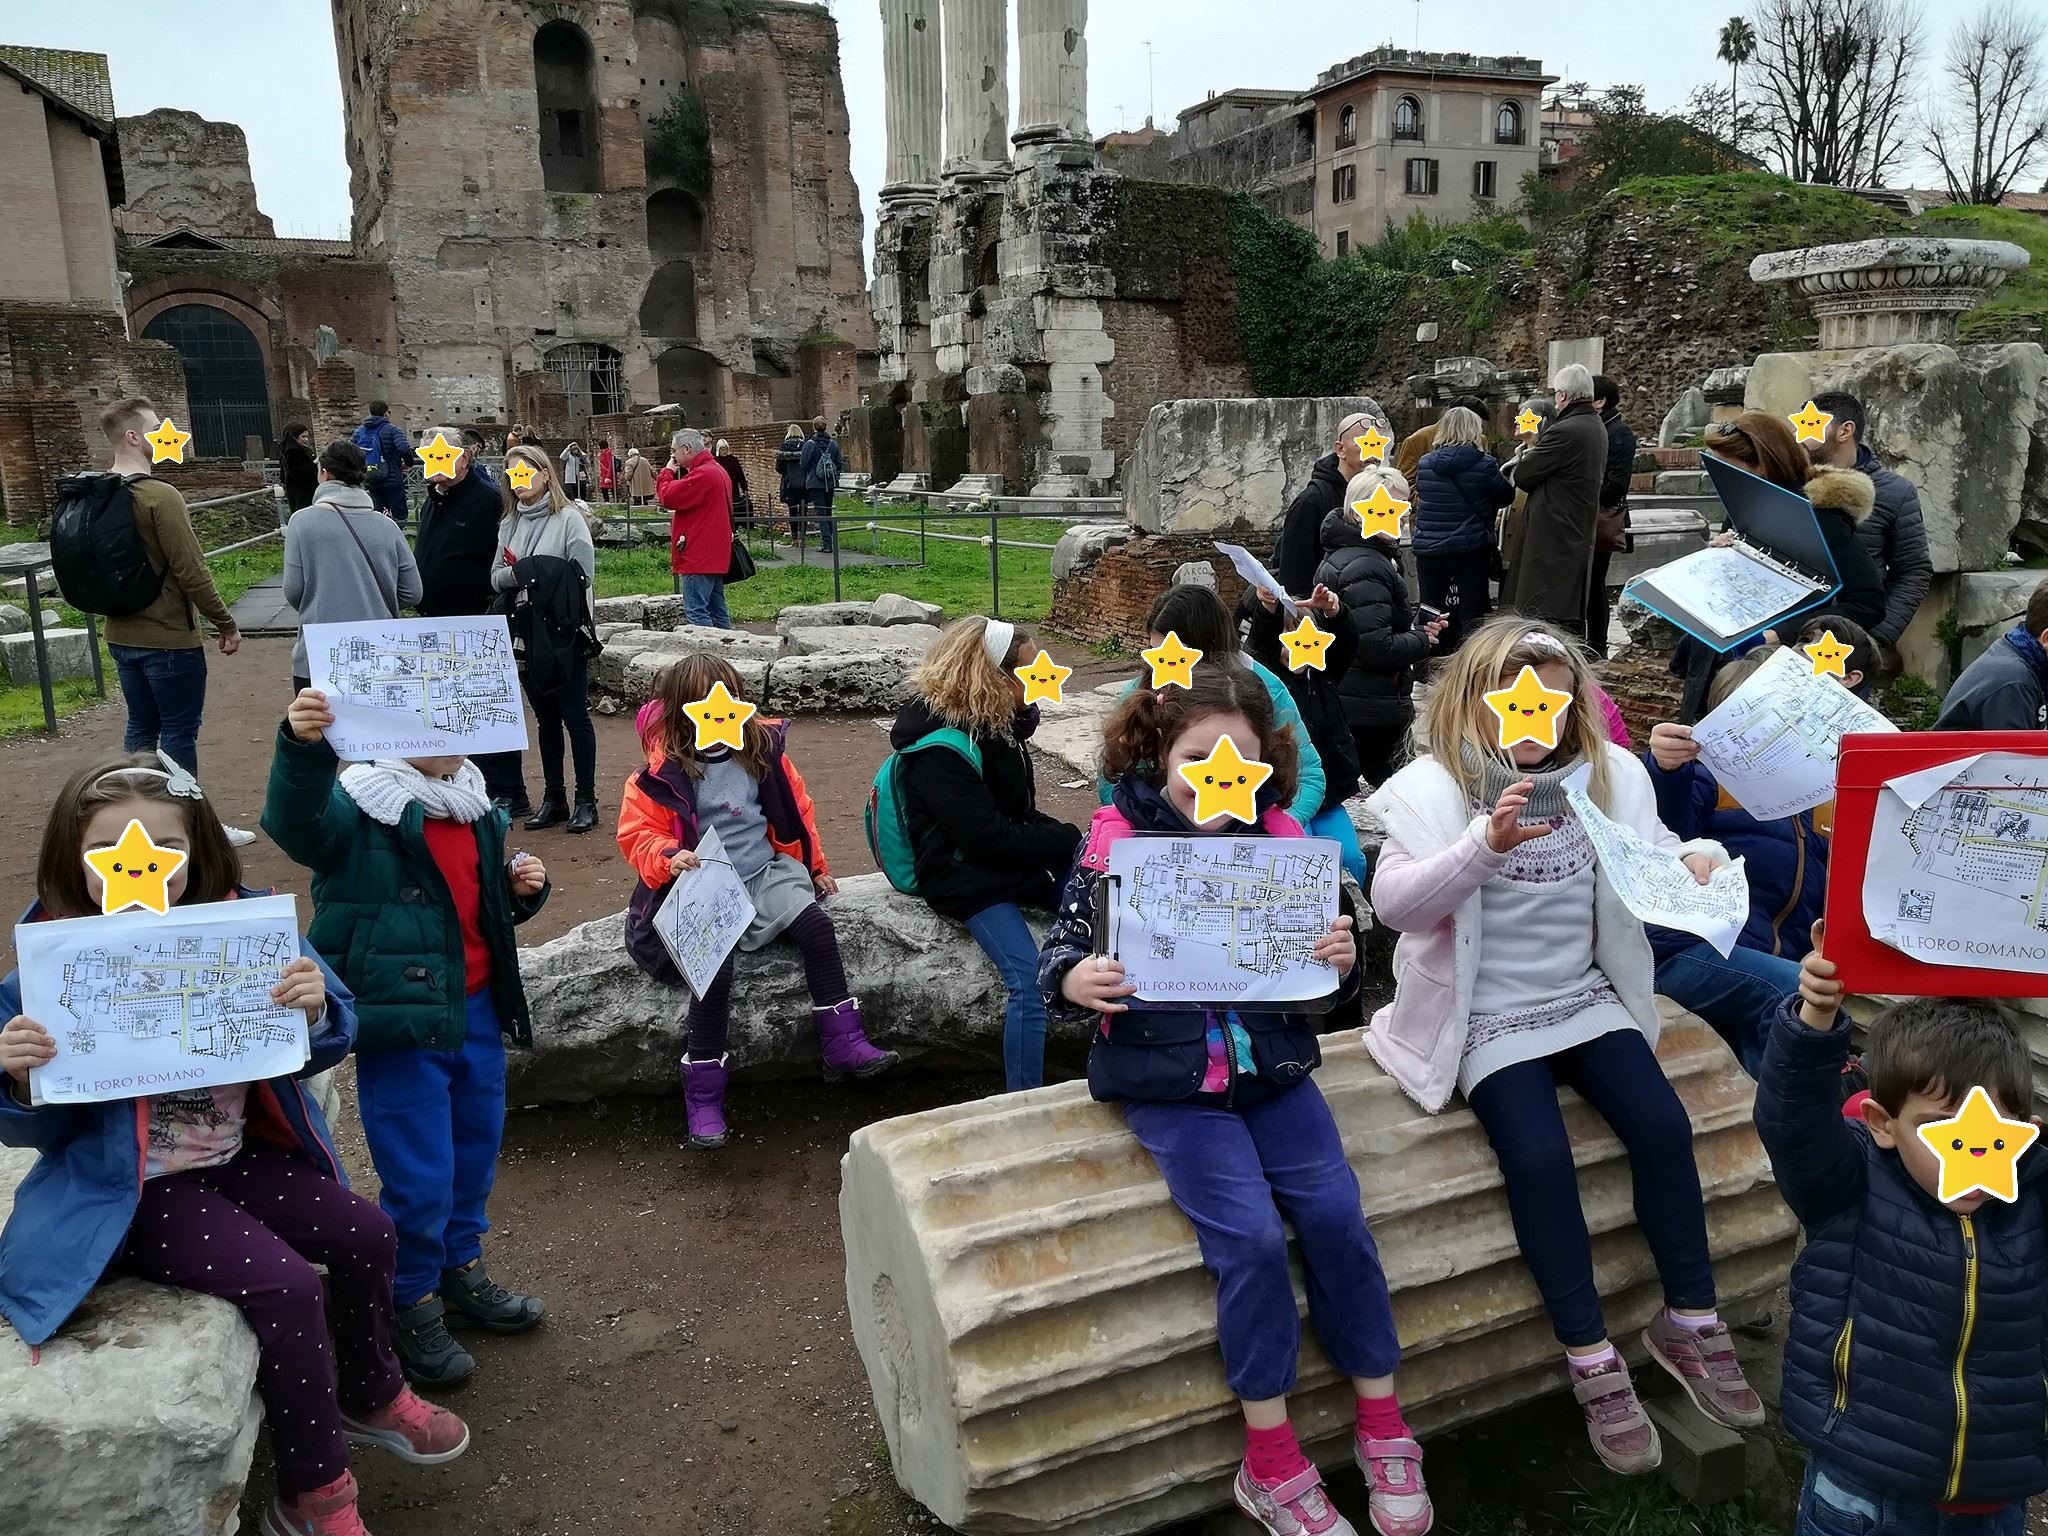 cicero in rome visite guidate per bambini roma weekend